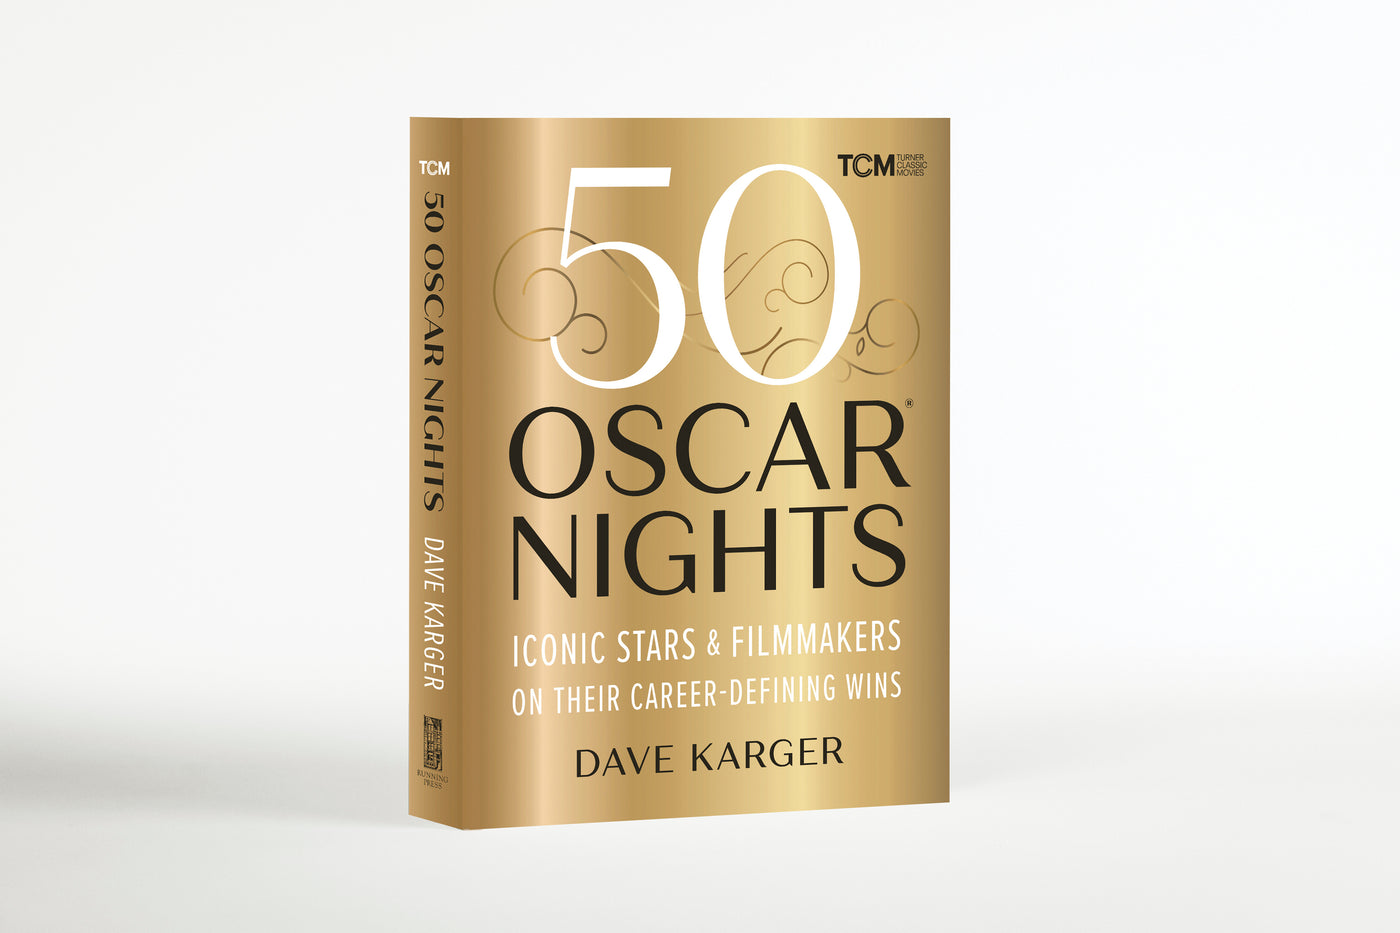 50 Oscar Nights by Dave Karger